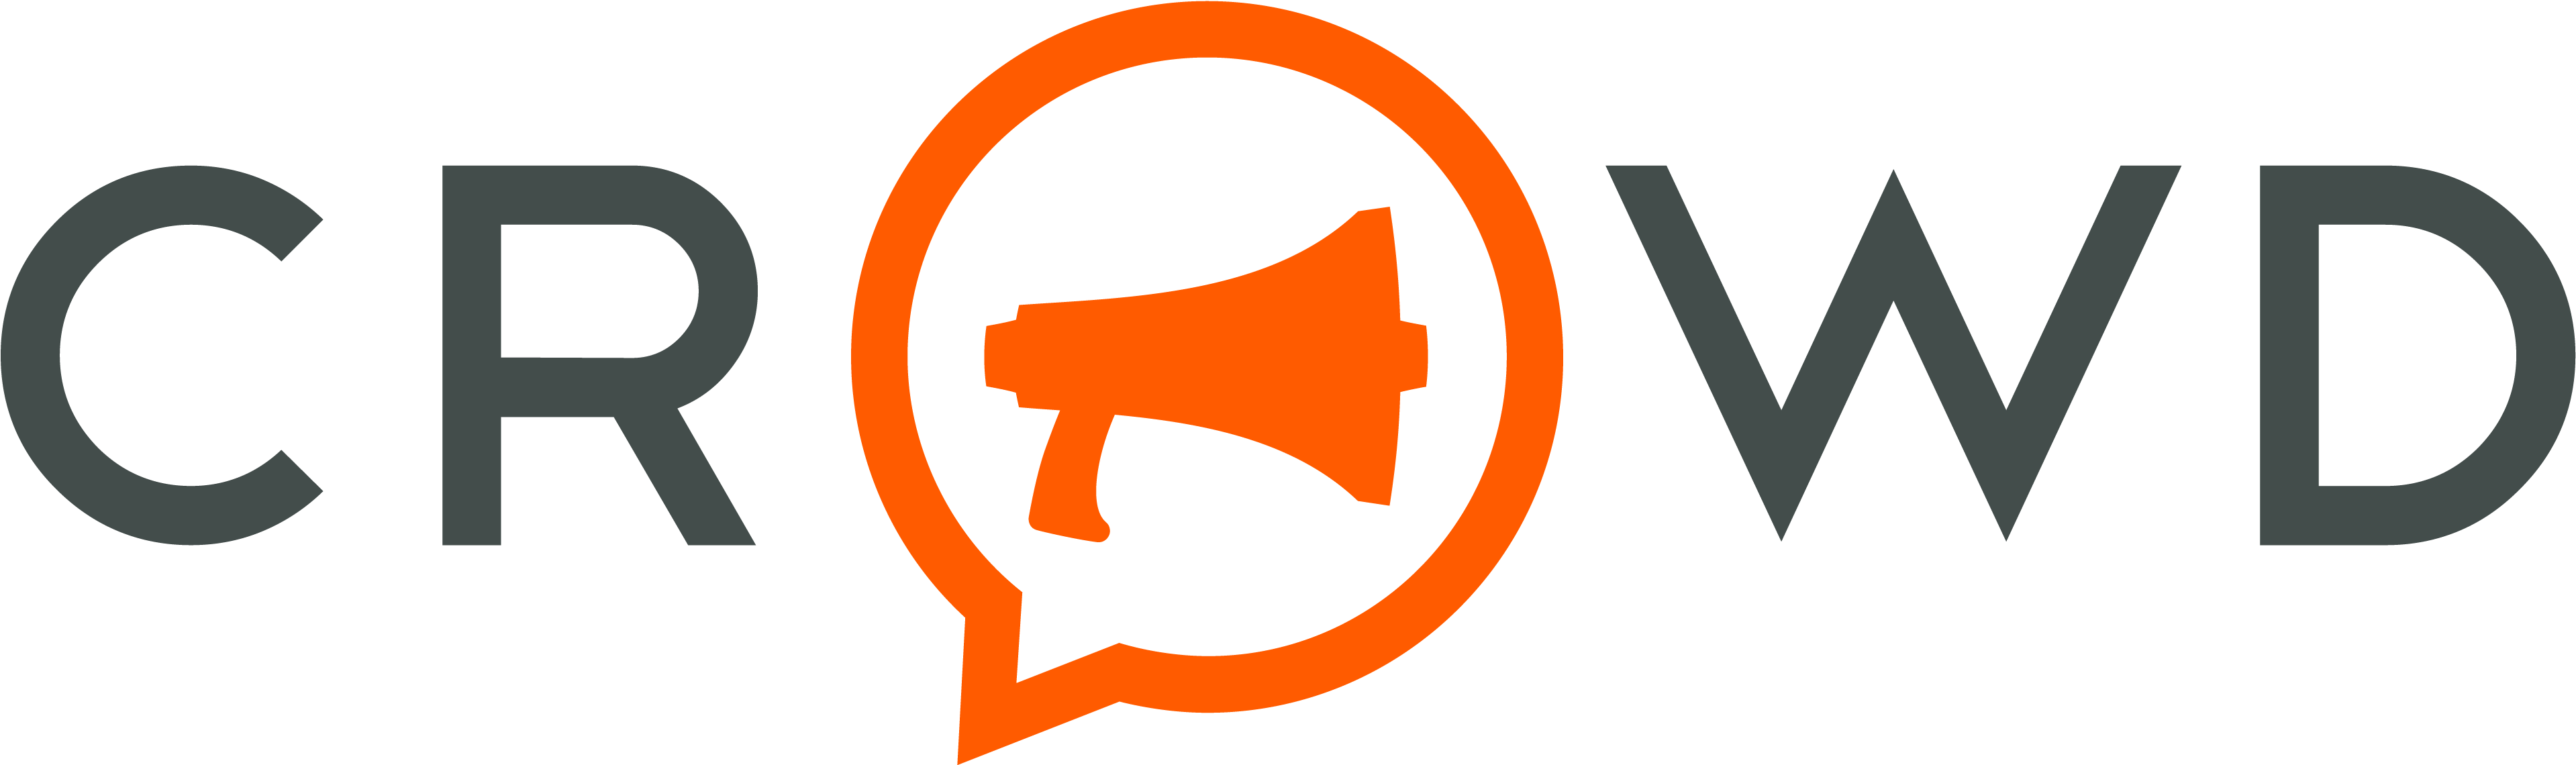 Crowd Logo Orangeand Gray PNG image